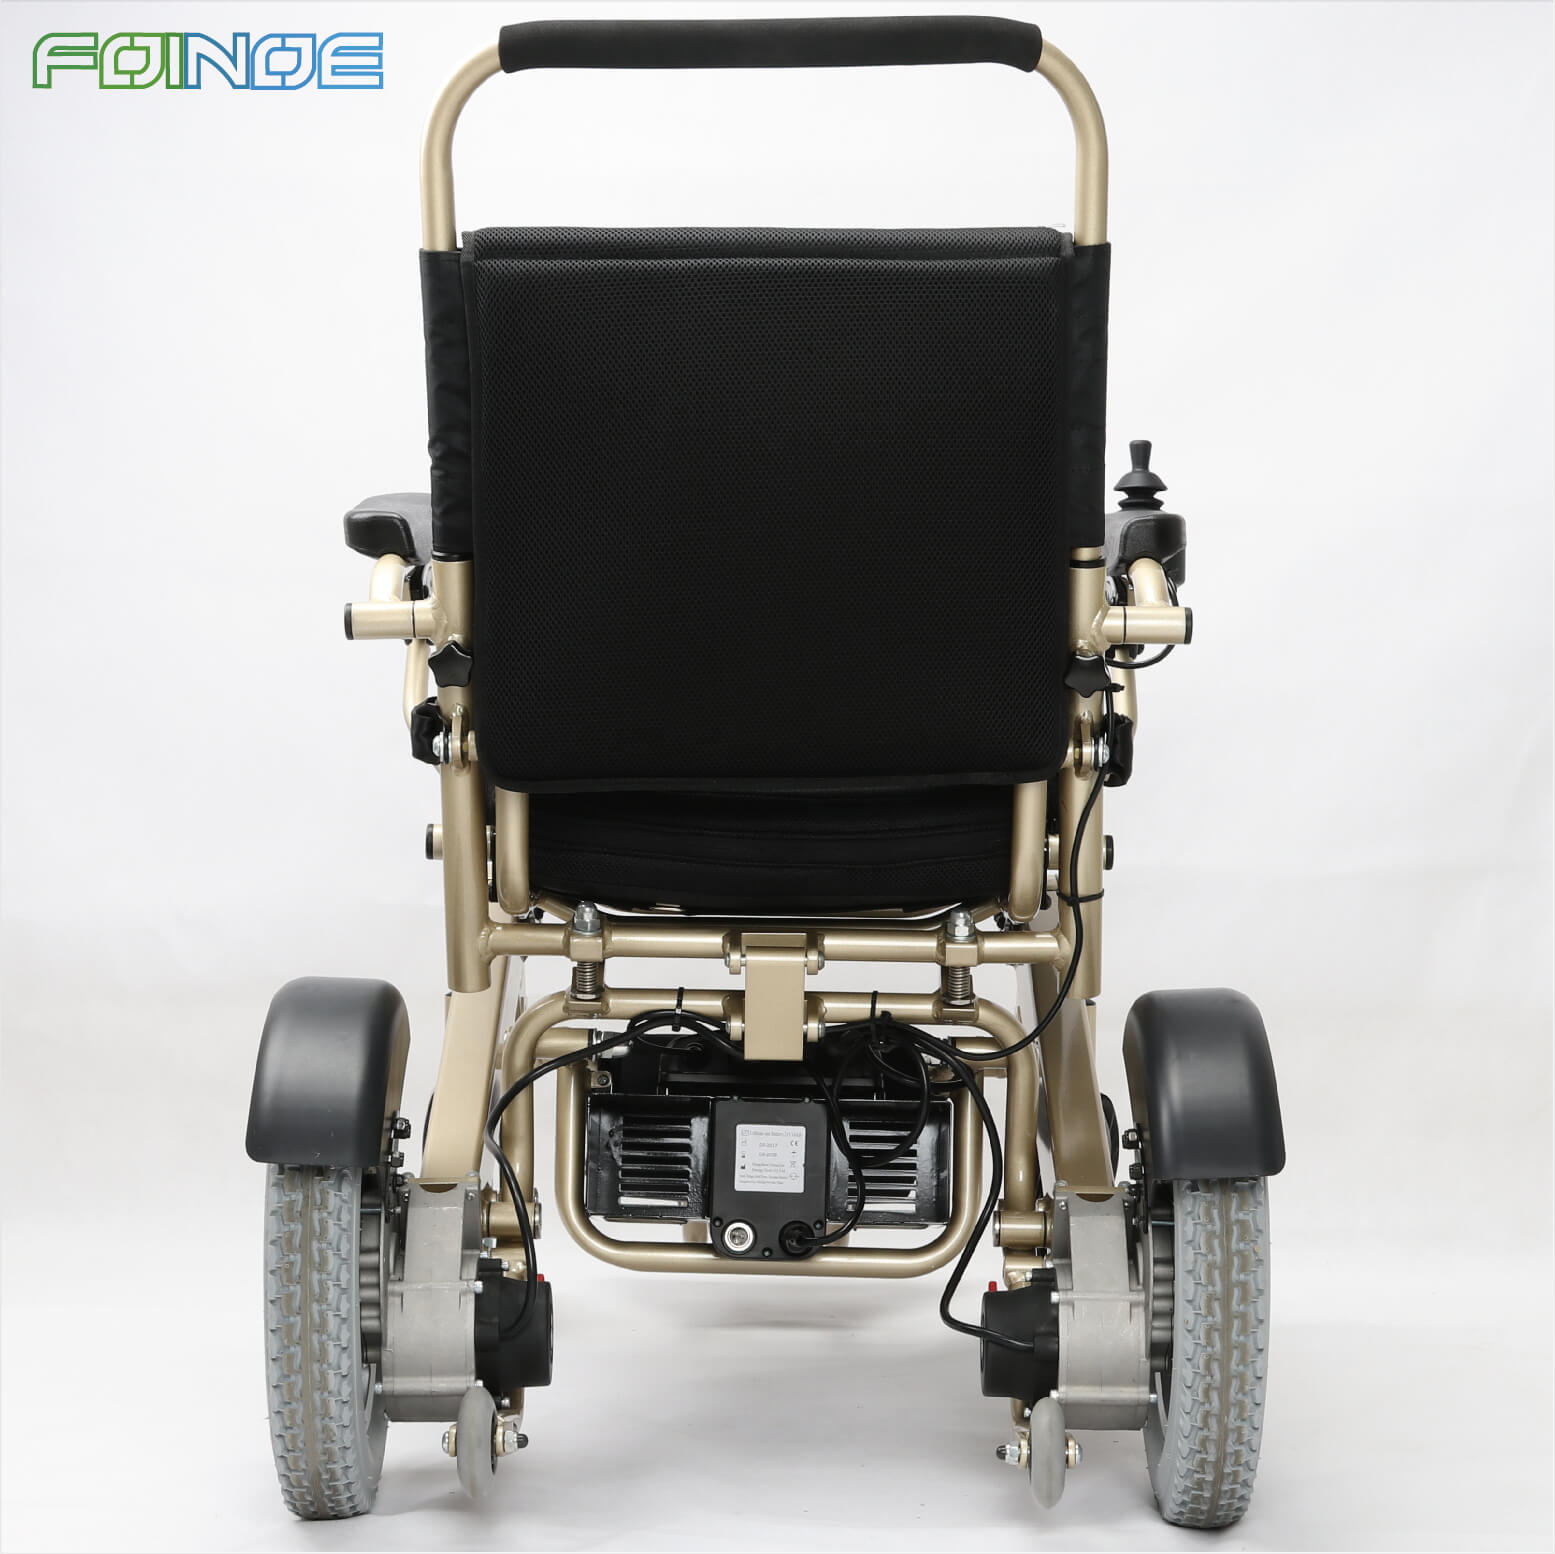 Folding Lightweight Motorized Wheelchair for Adults